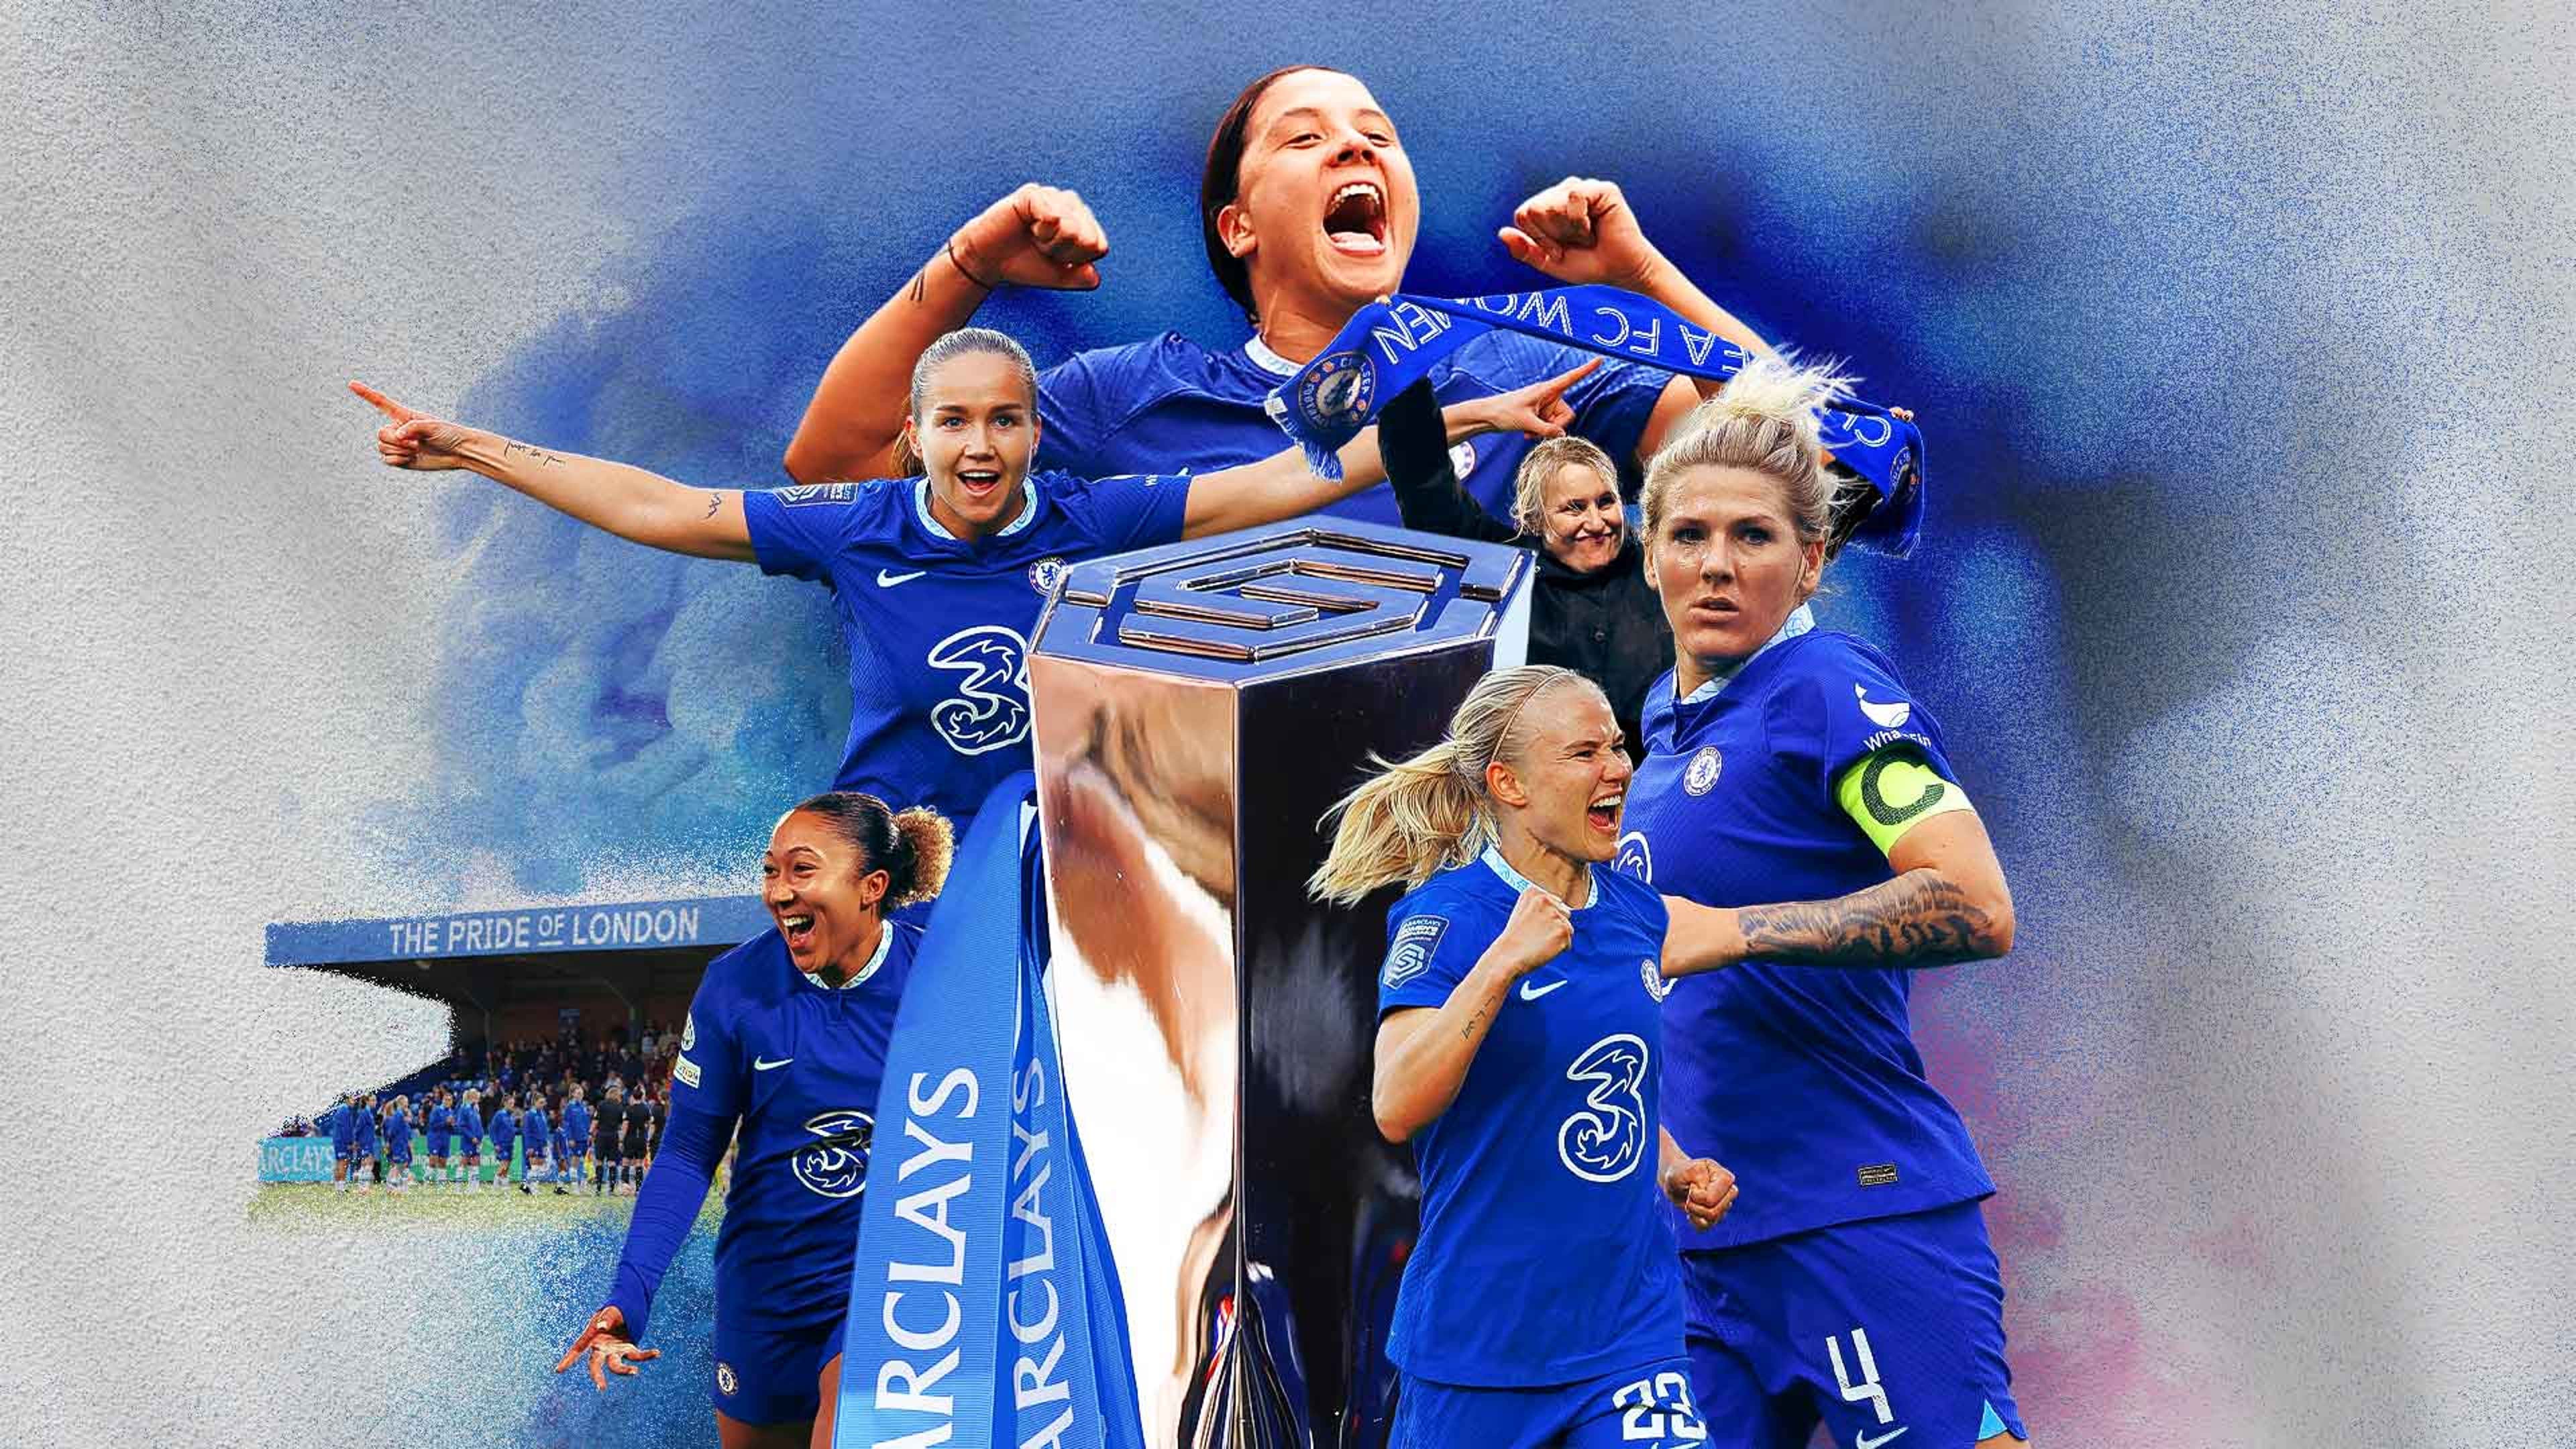 London Is Blue - Chelsea FC Podcast, Listen here